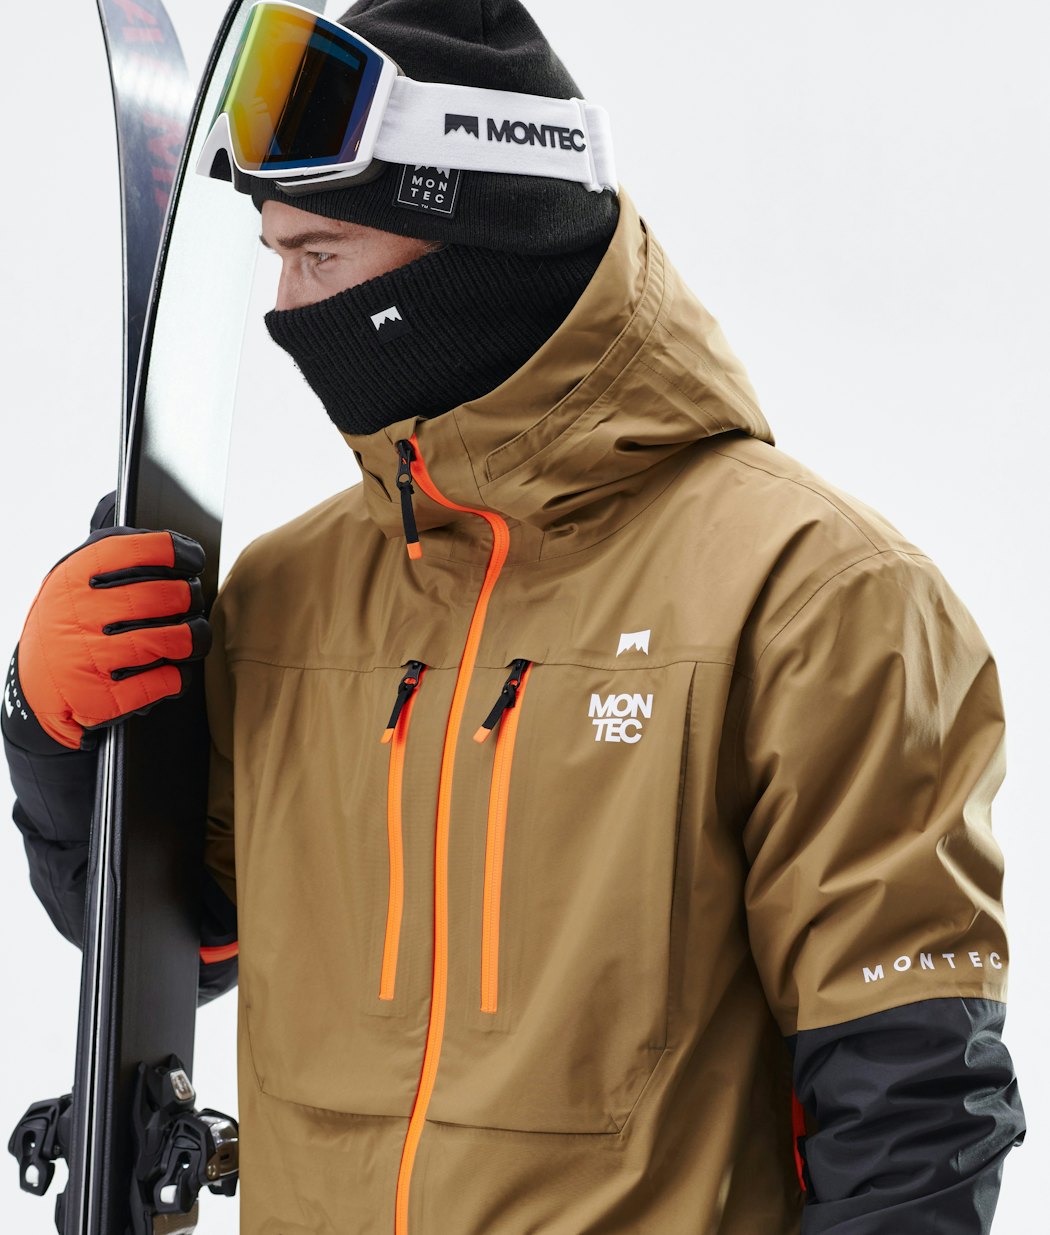 Fenix 3L Ski Jacket Men Gold/Black